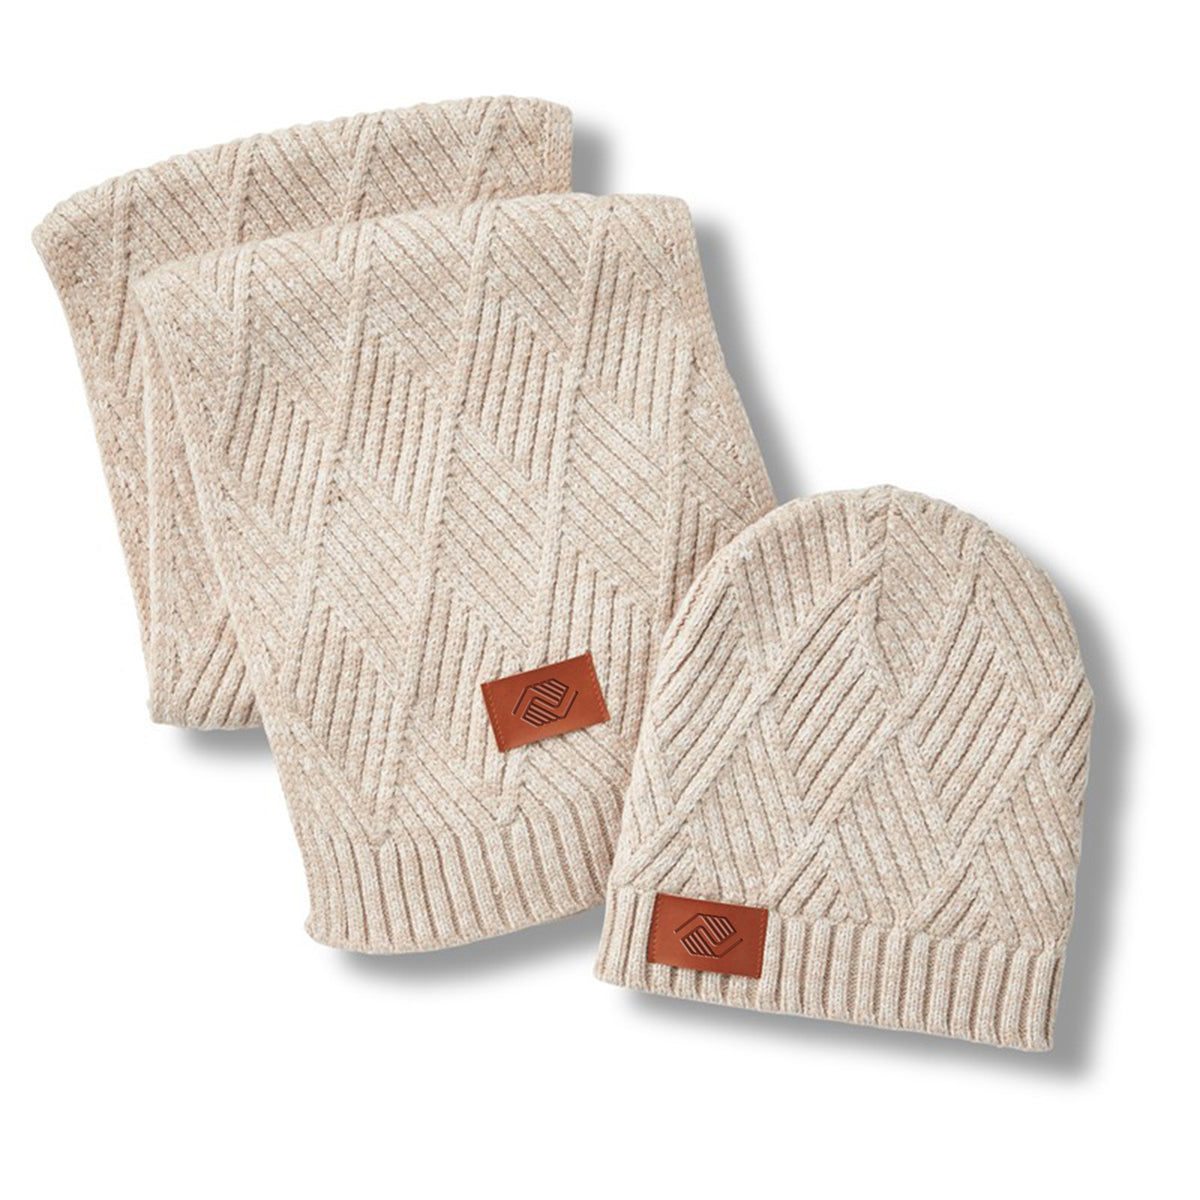 Leeman™ Trellis Knit Bundle and Go Gift Set - Oatmeal